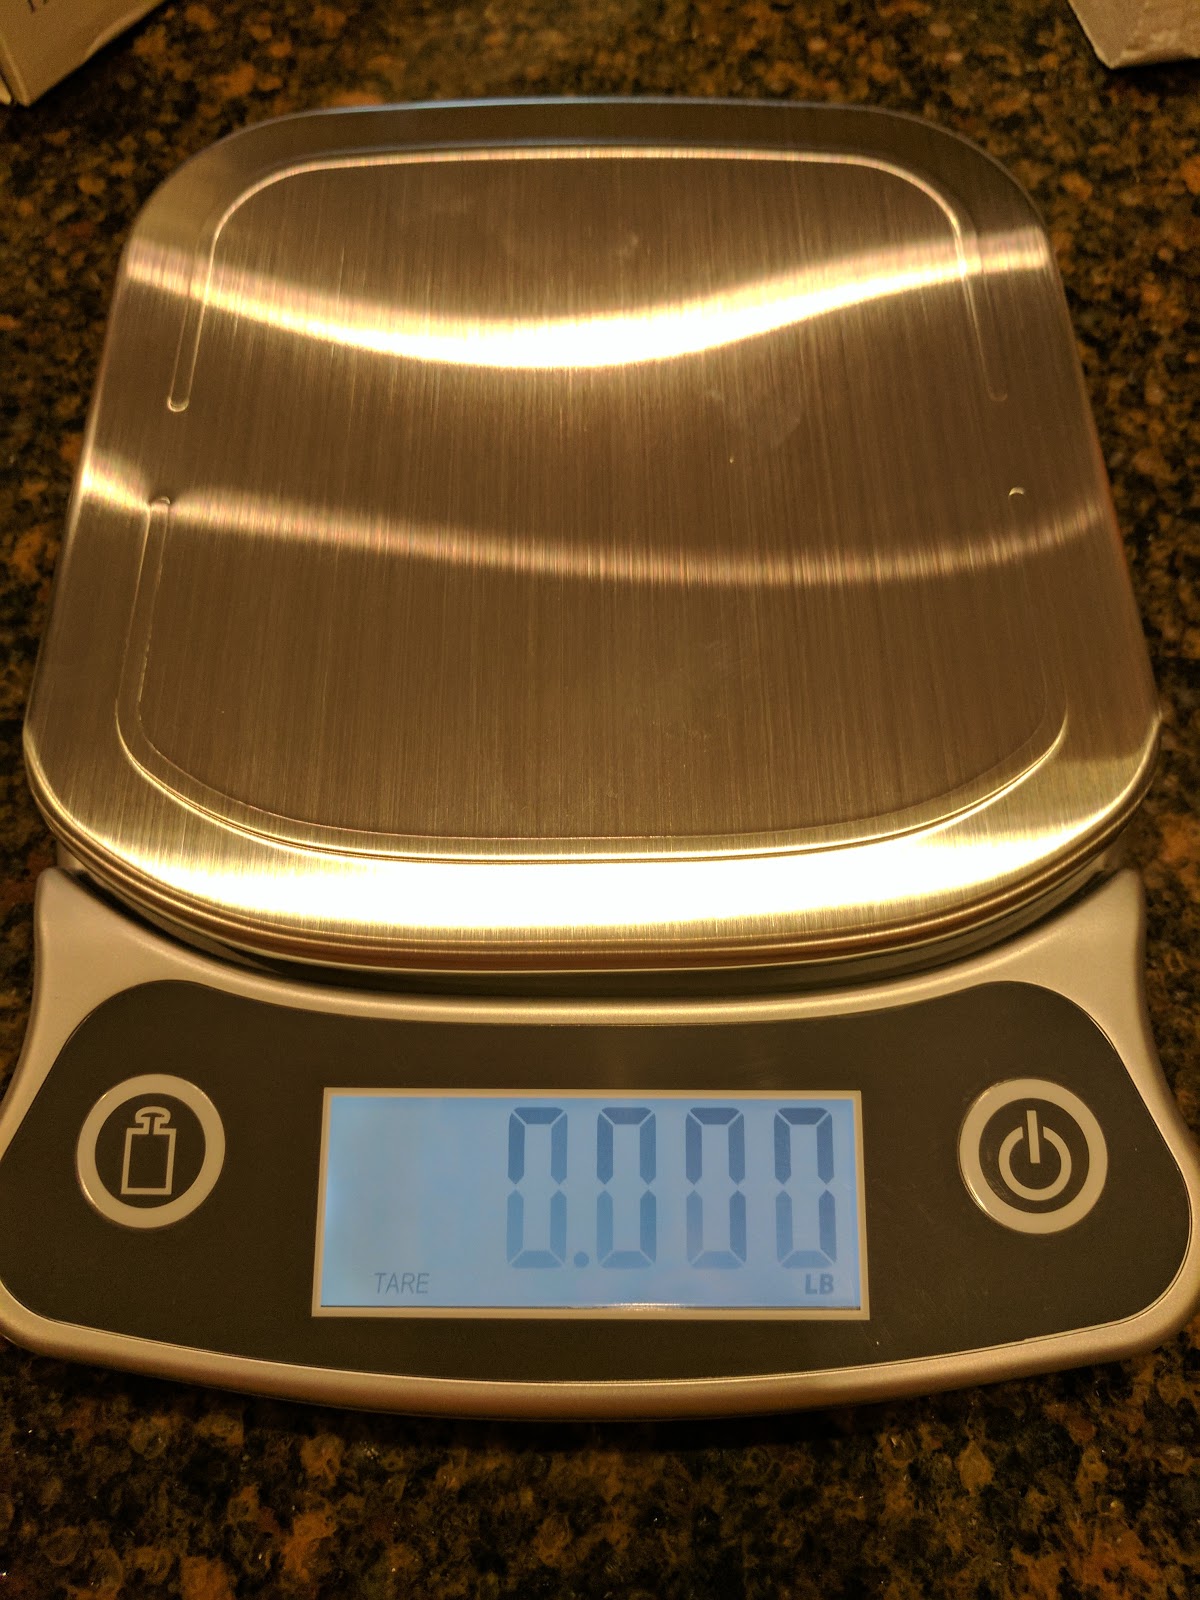 Eatsmart - Precision Pro Digital Kitchen Scale - Silver